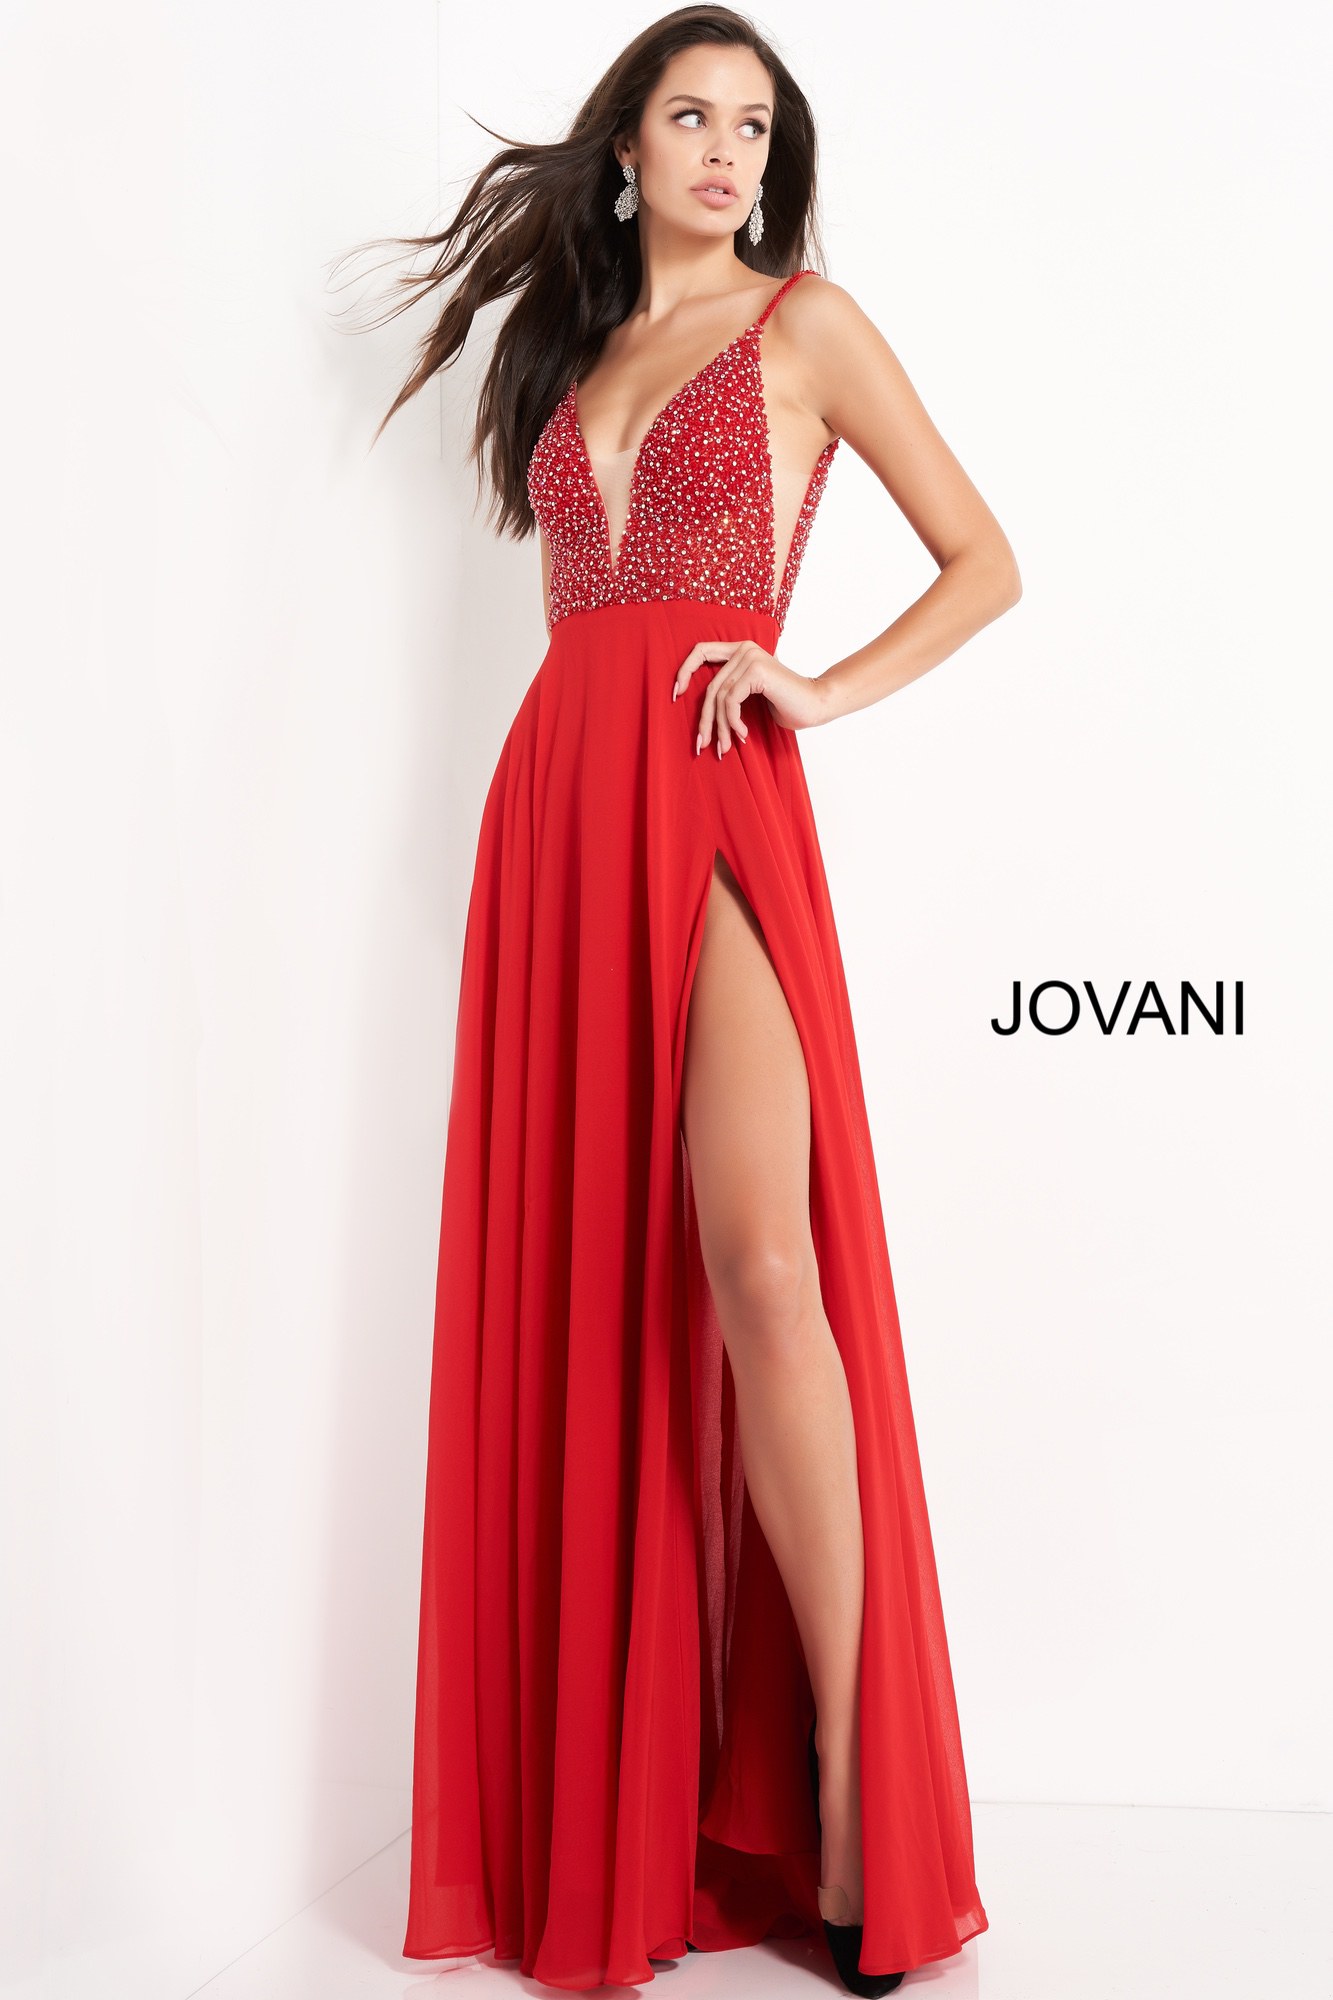 Jovani 04091 | Red Chiffon High Slit Skirt Prom Dress